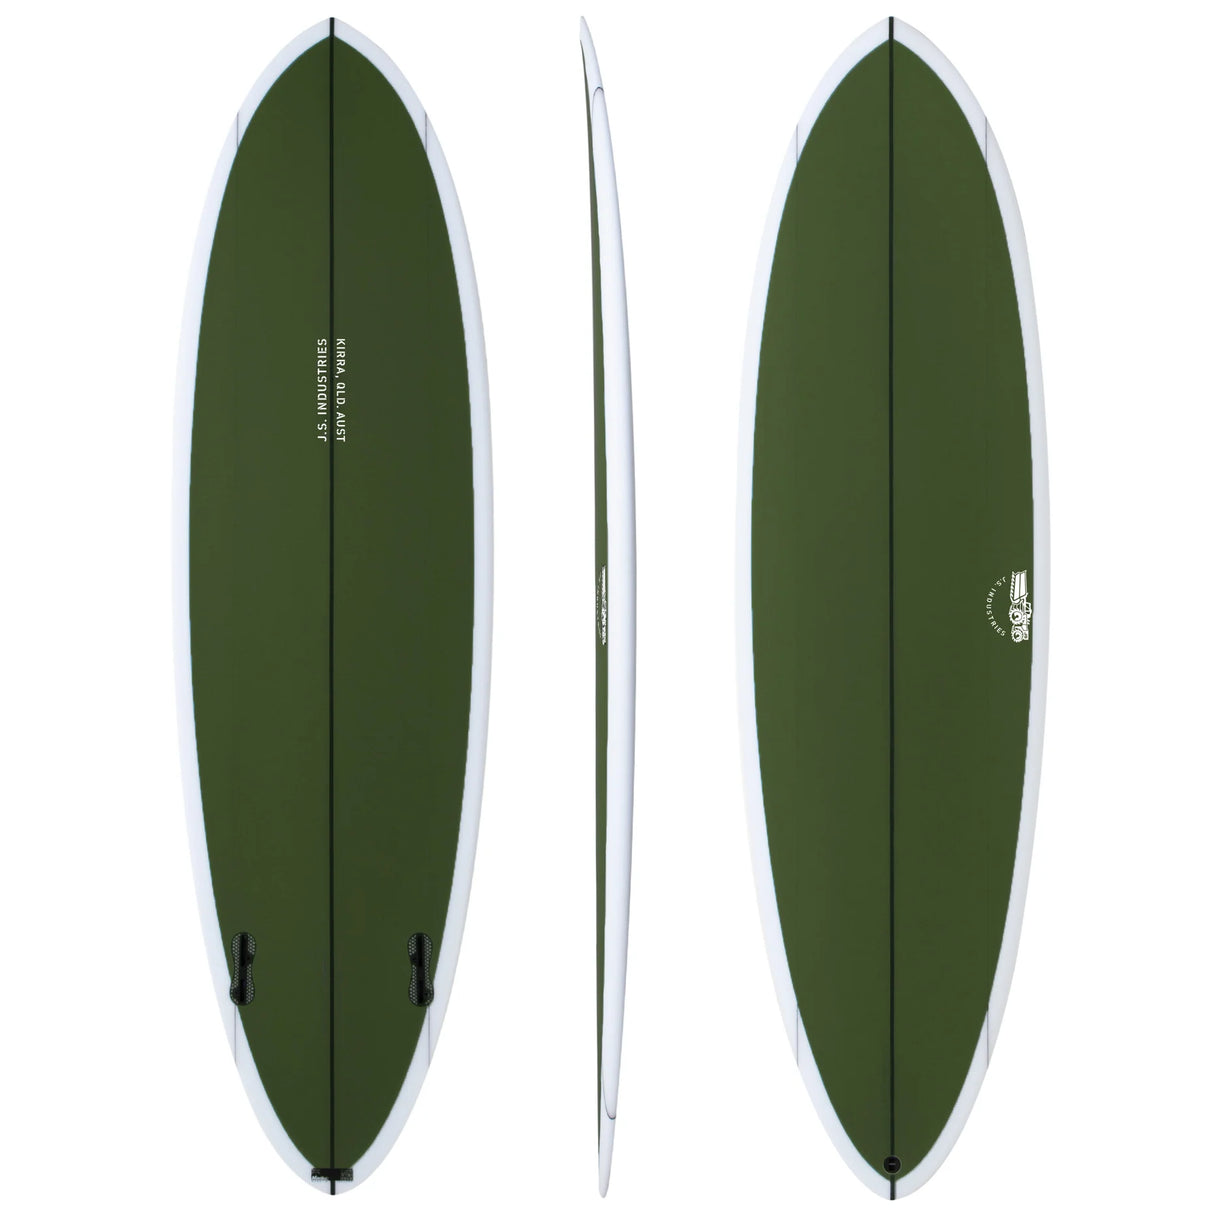 JS Industries Big Baron PE Surfboard - Coloured